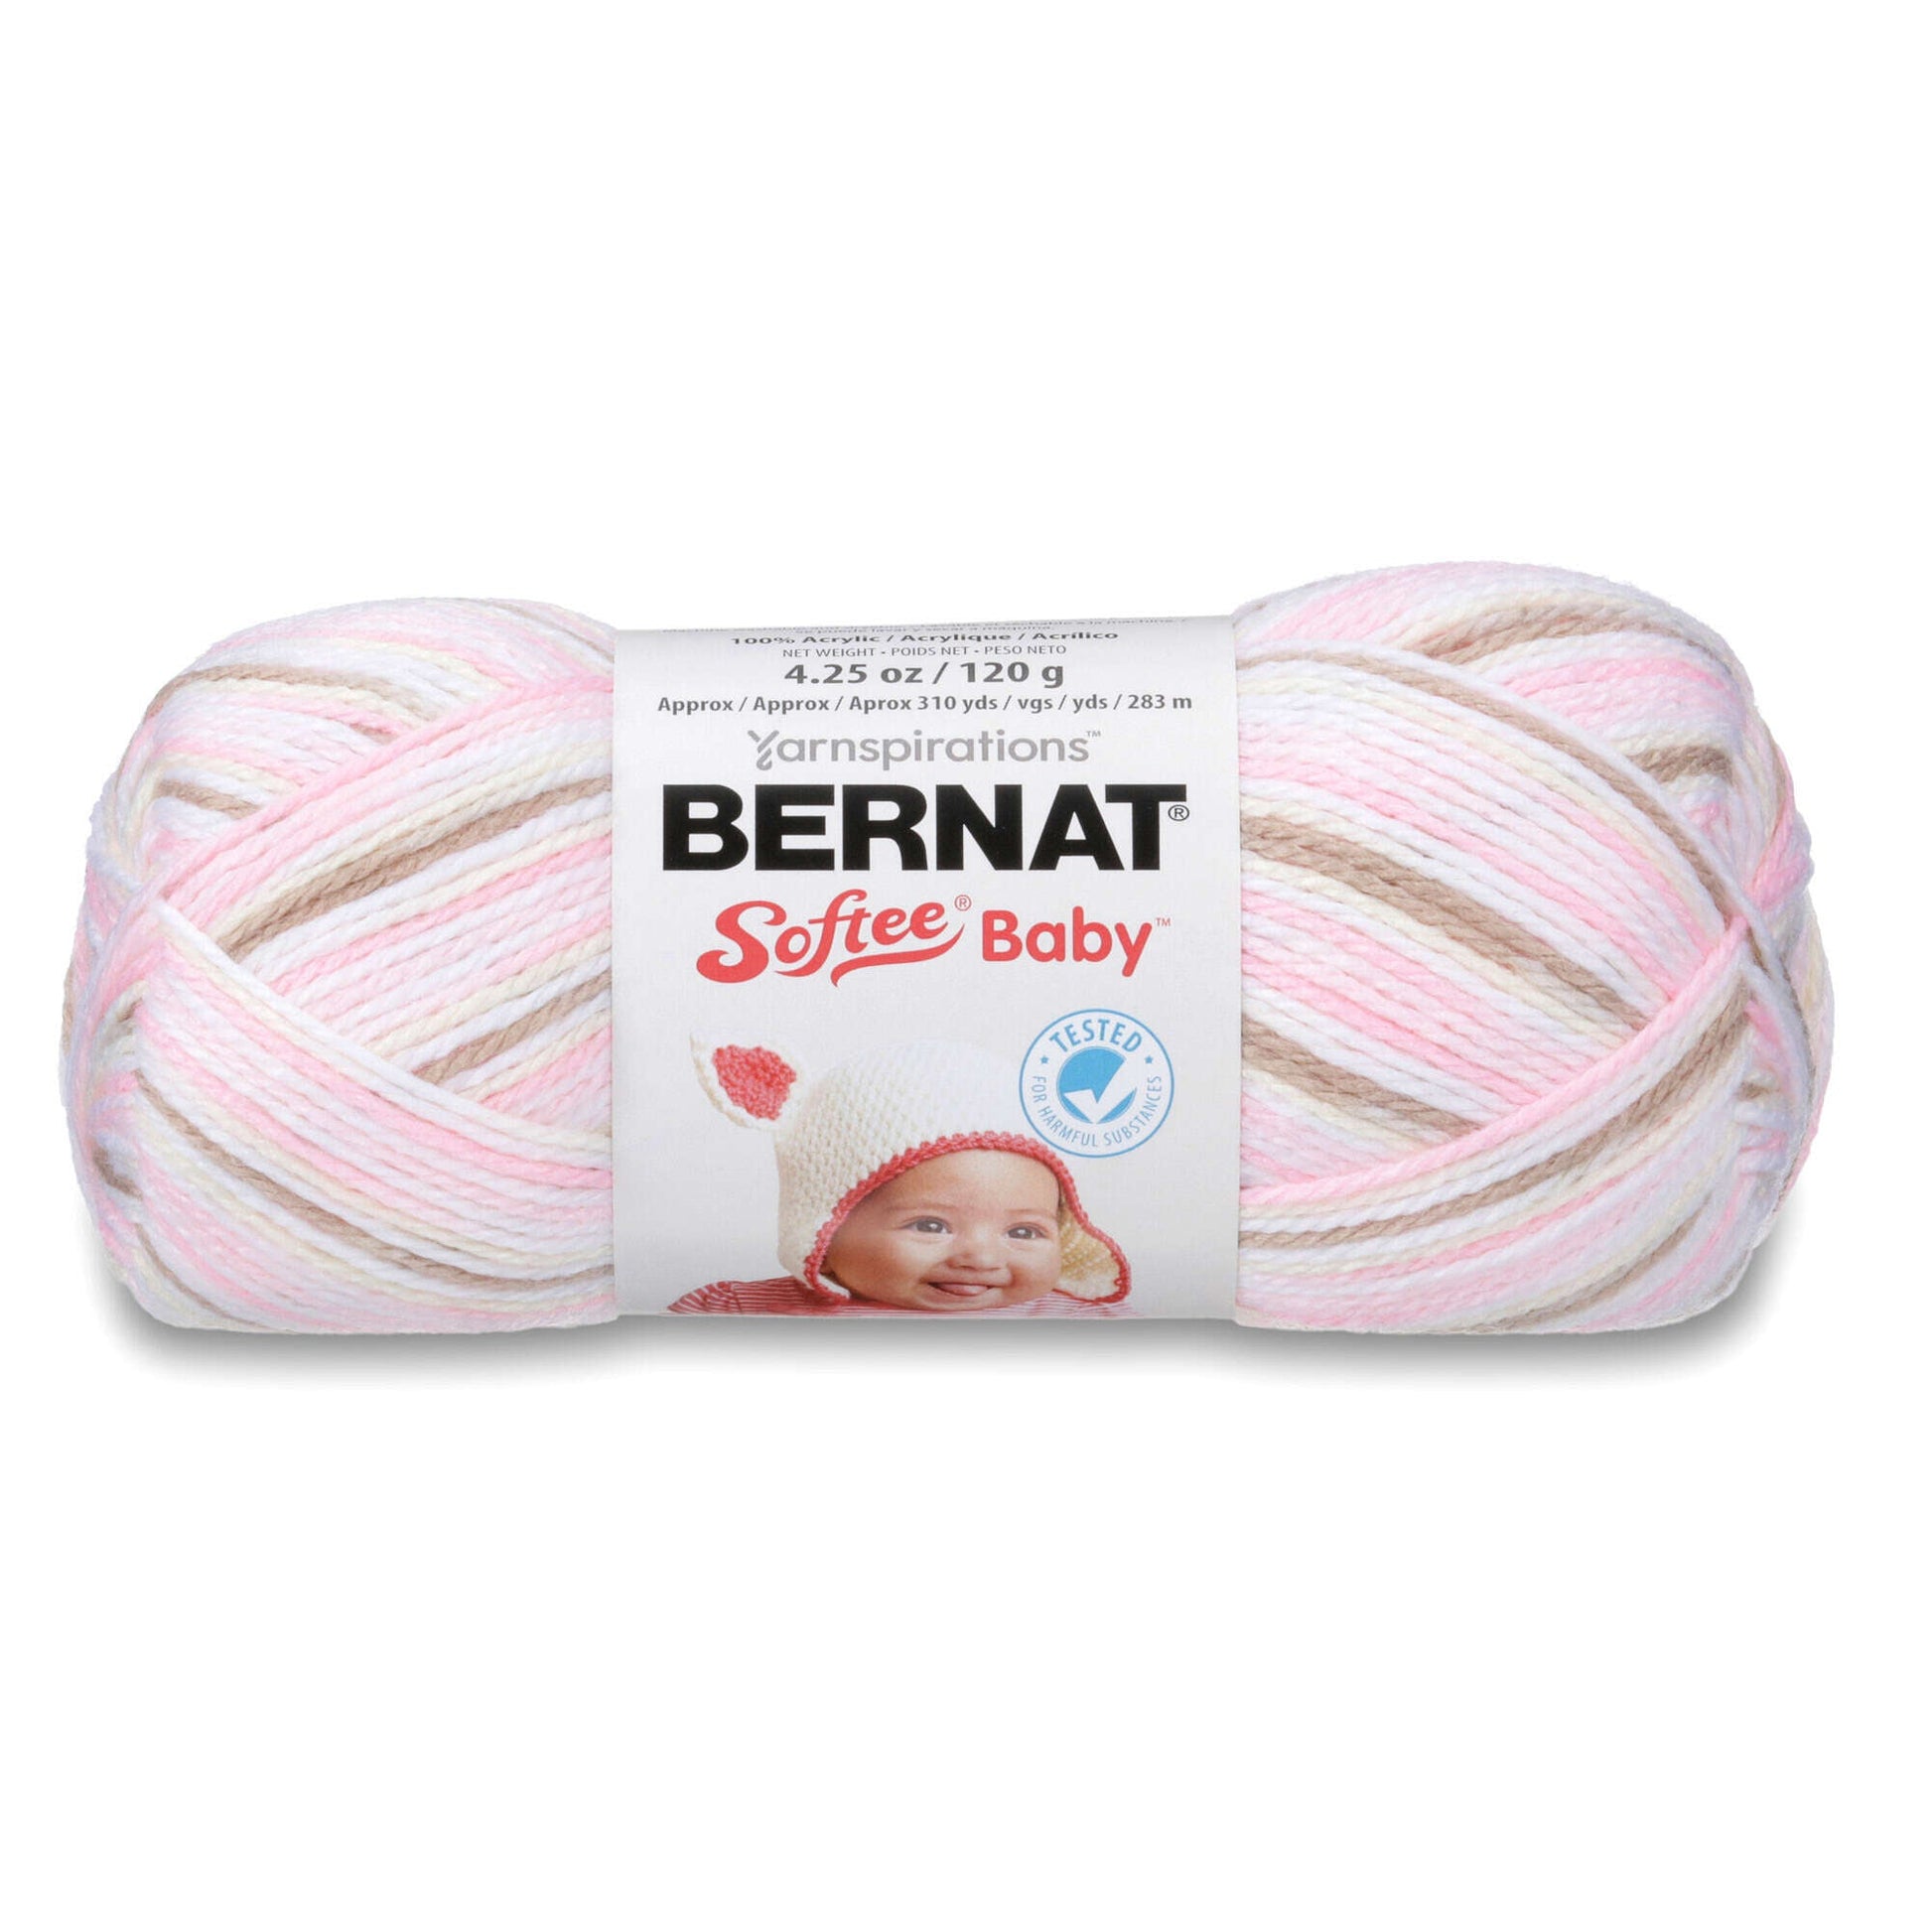 Bernat Softee Baby Variegates Yarn